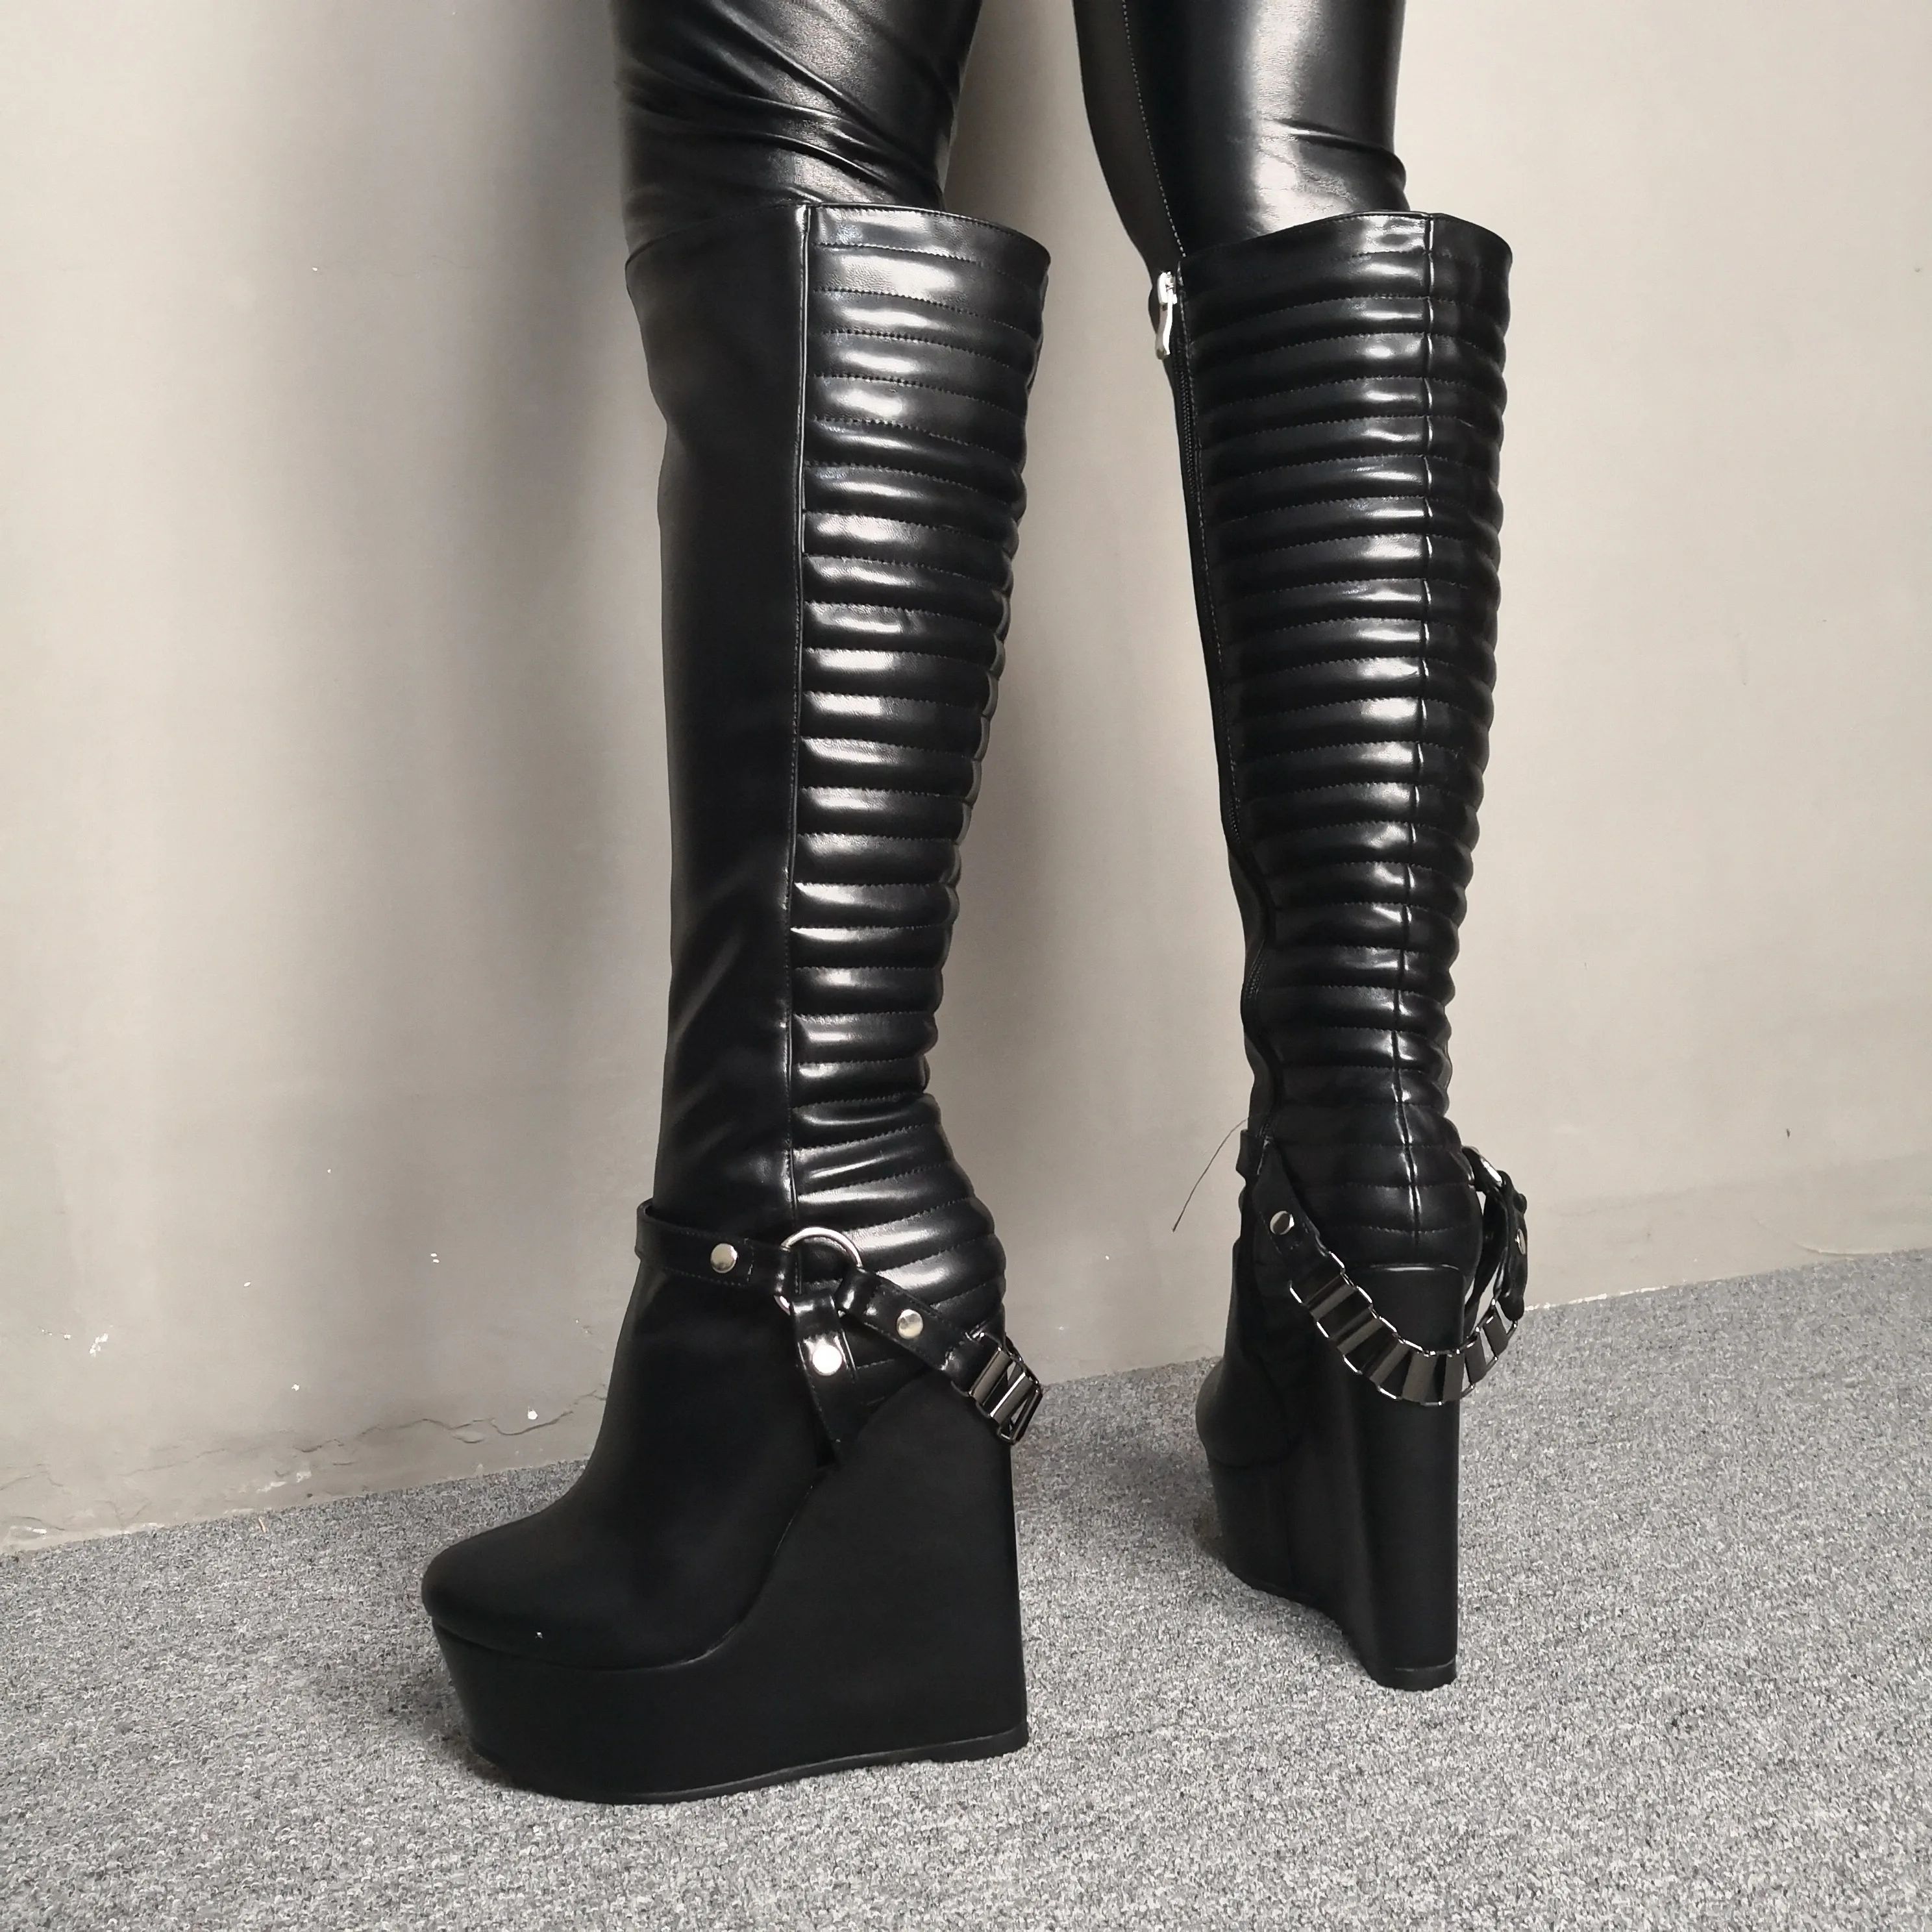 Original Intention Stylish Women Boots Platform wedge High Heels Boots Round Toe Elegant Black Zip Shoes Women Size 4-15